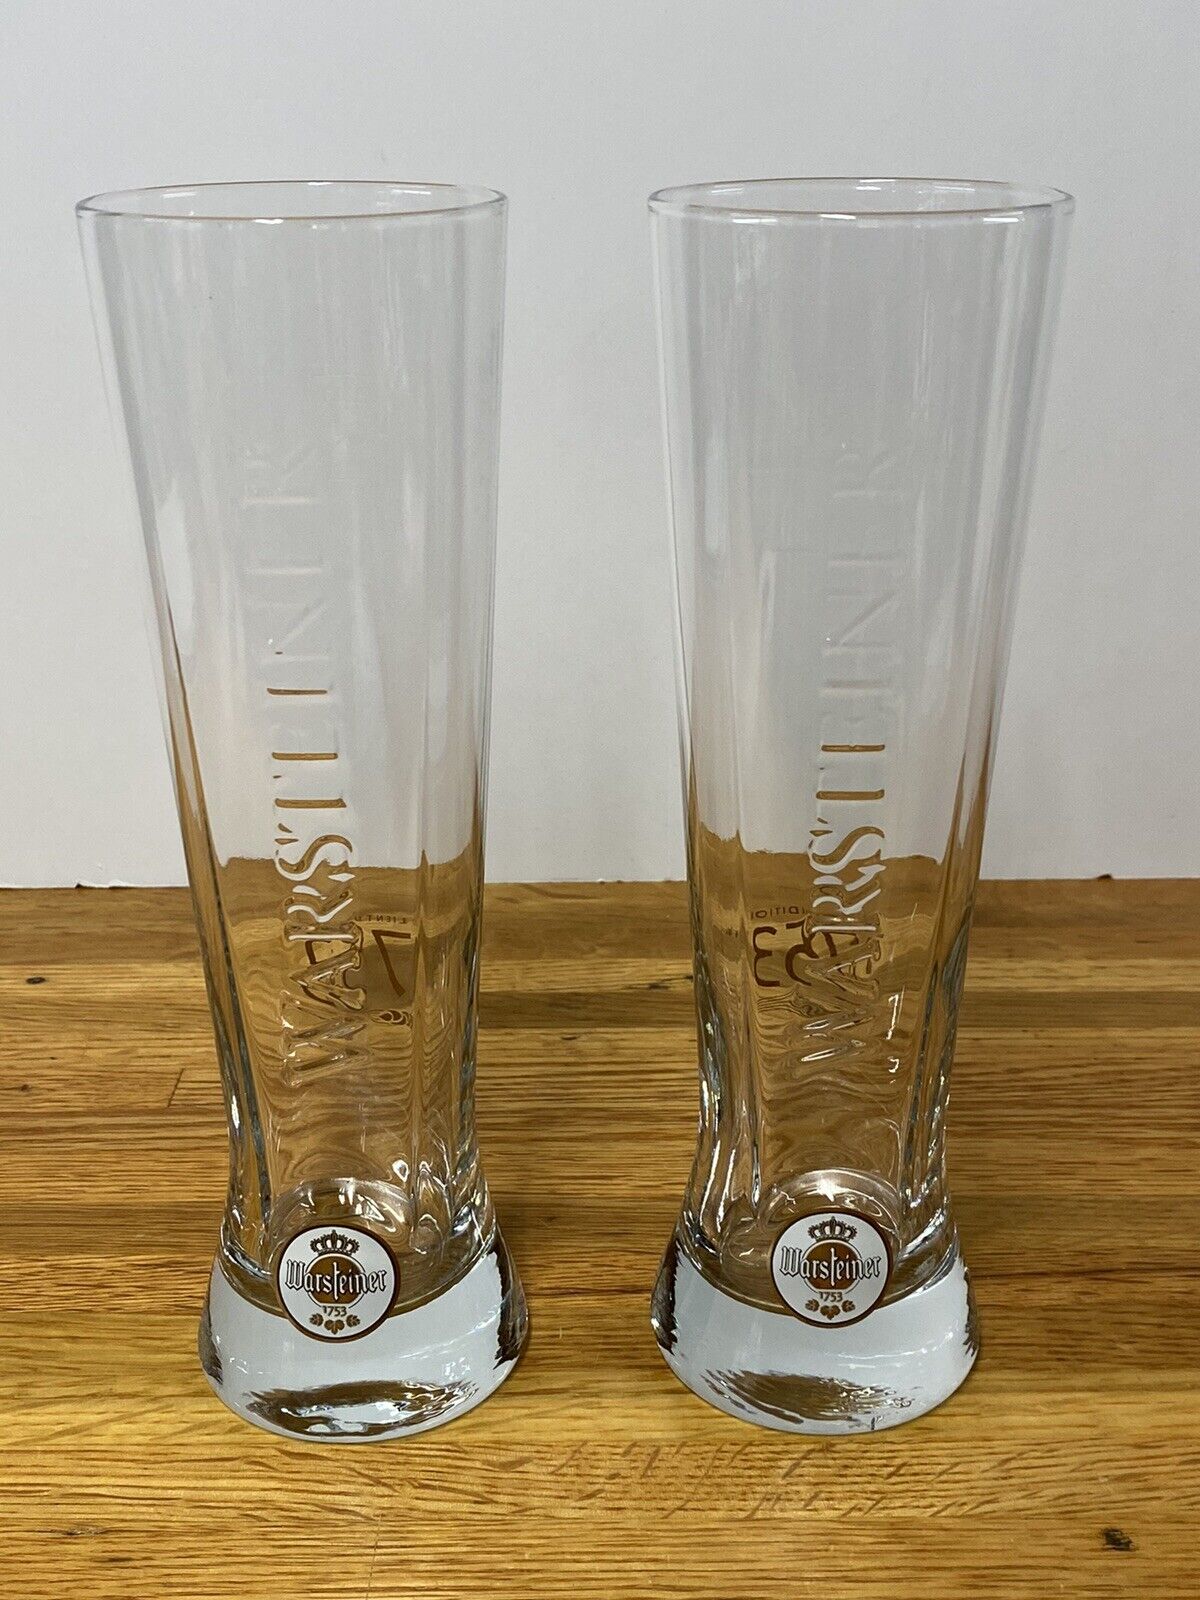 Warsteiner German Beer Glasses Set Of 2 Excellent Condition 0.4 L